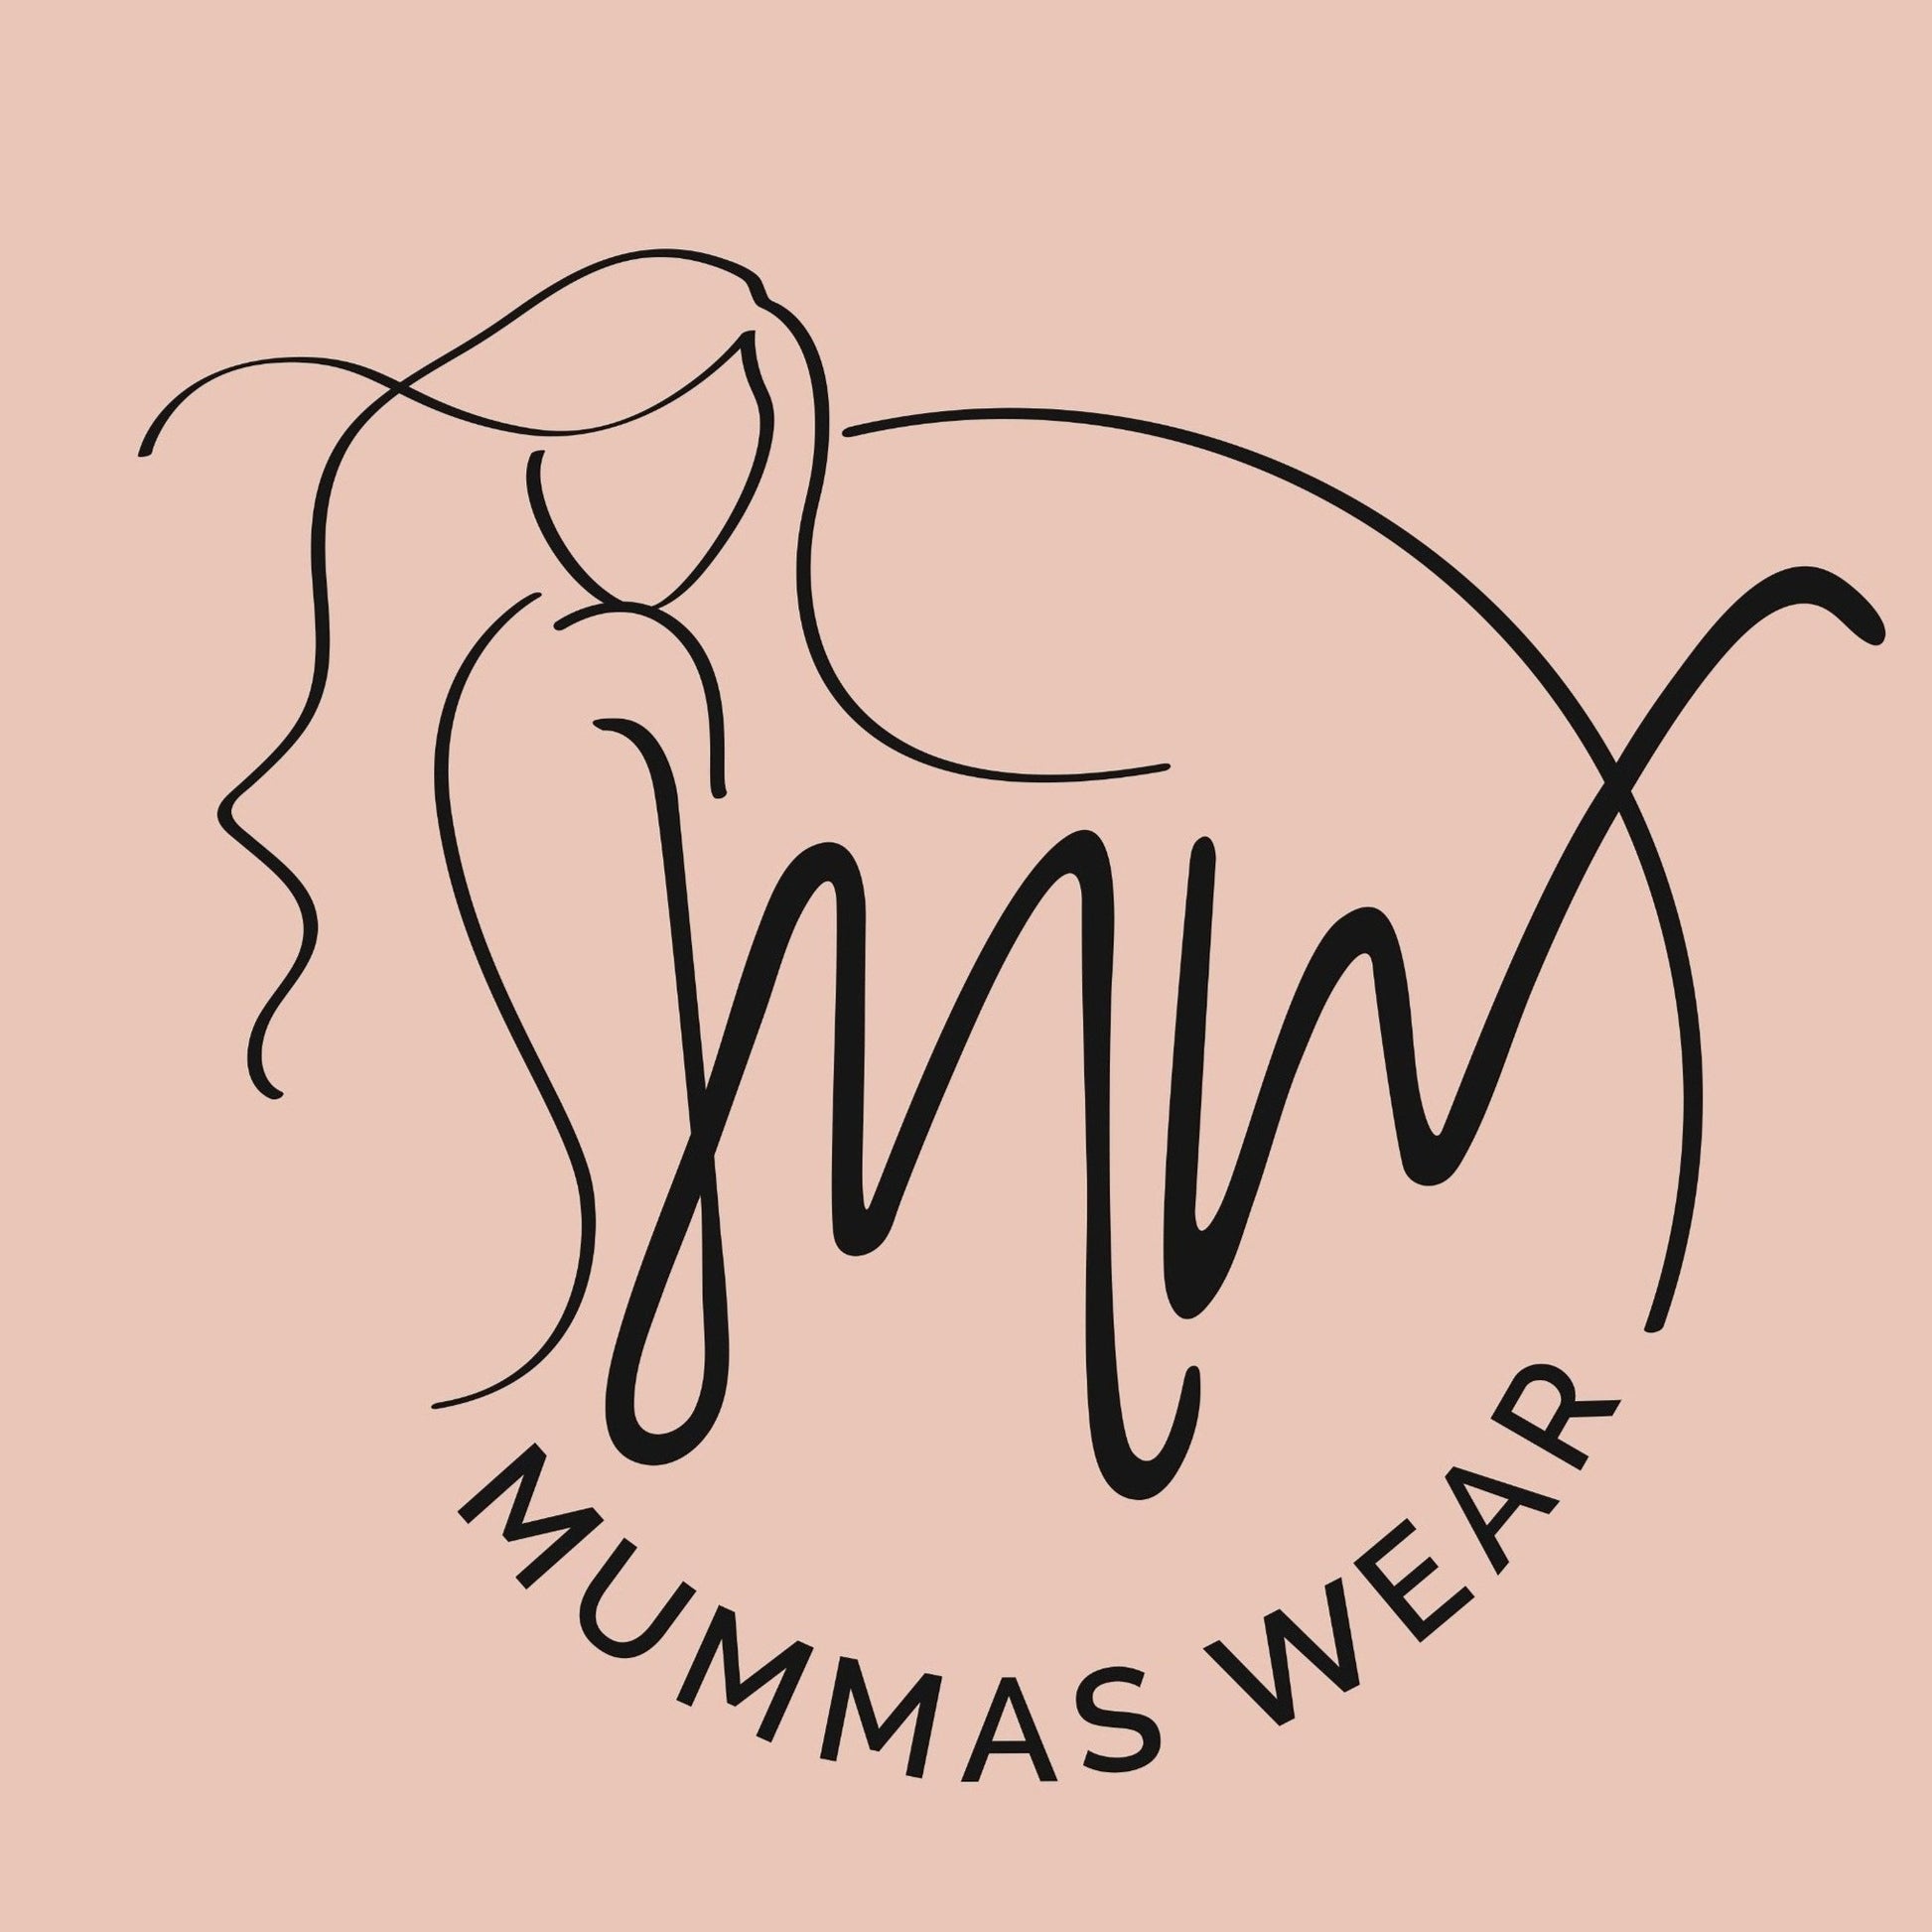 alt="Mummas Wear logo"